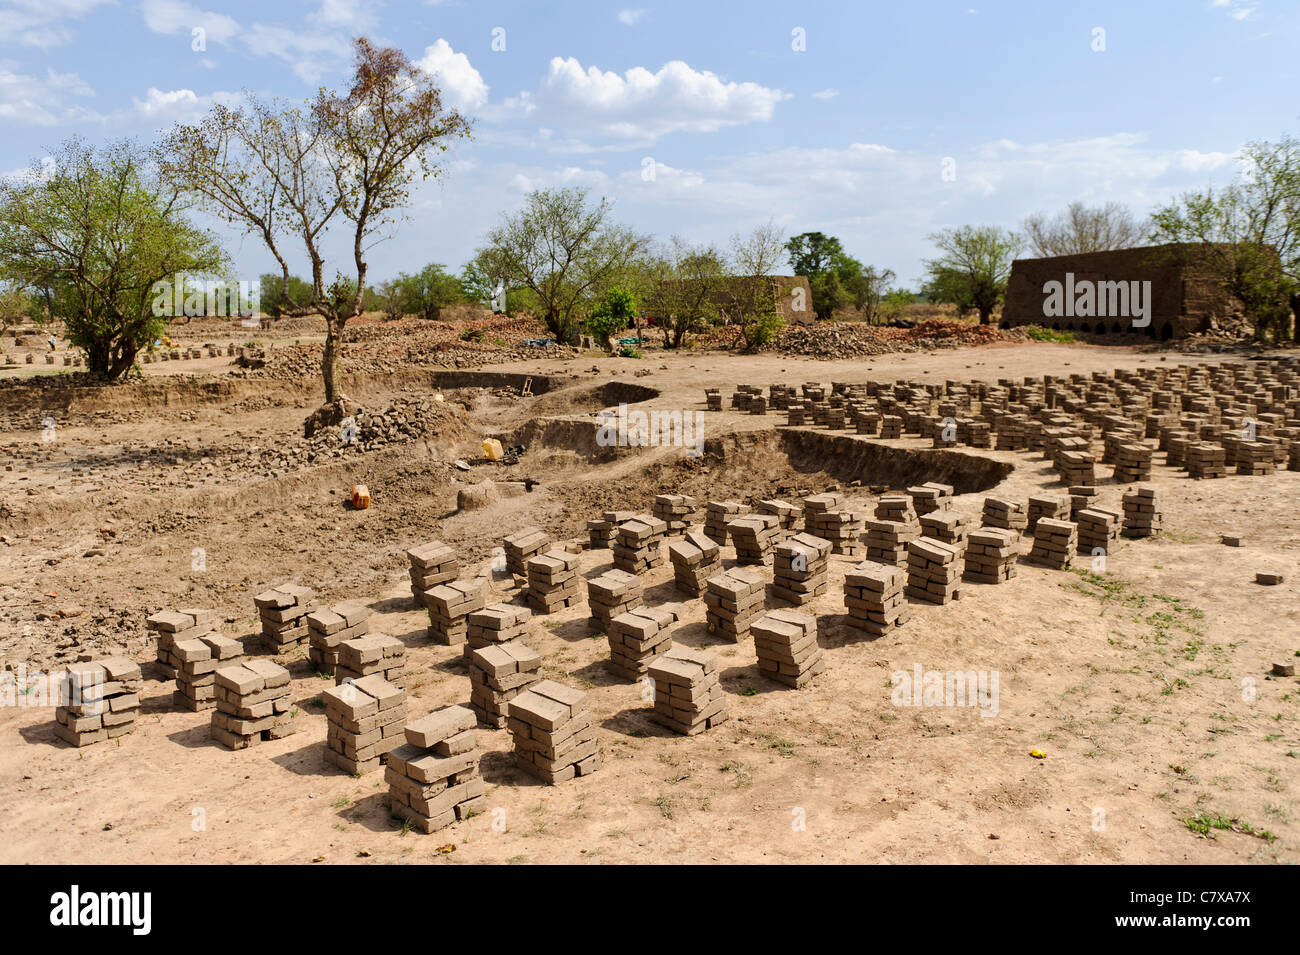 Bricks being manufactured, Wau, Bahr el Ghazal, South Sudan. Stock Photo